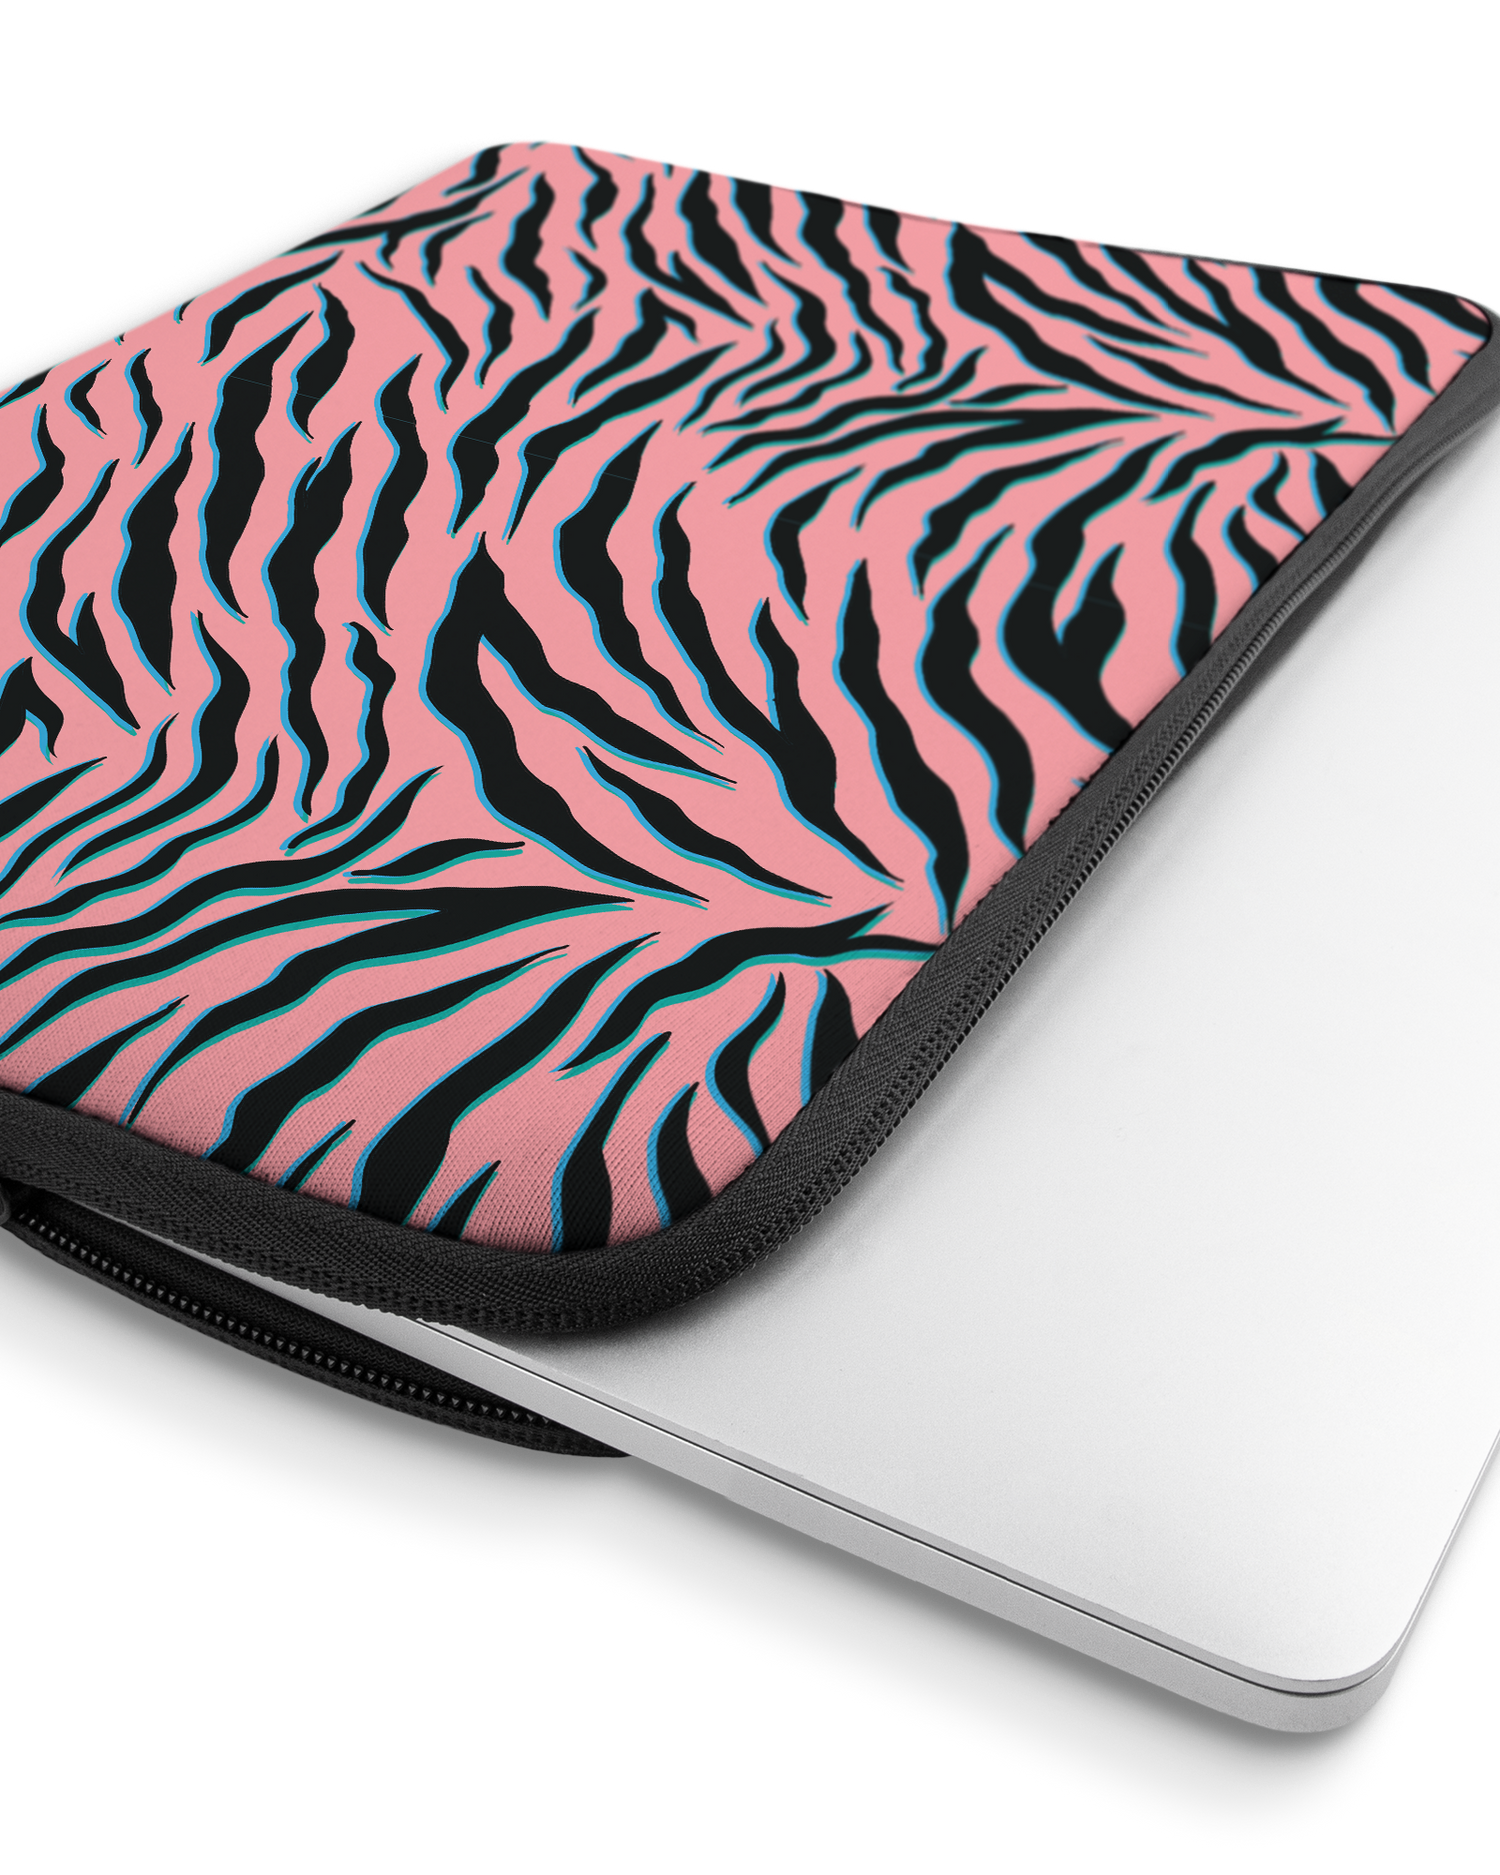 Pink Zebra Laptop Case 16 inch with device inside